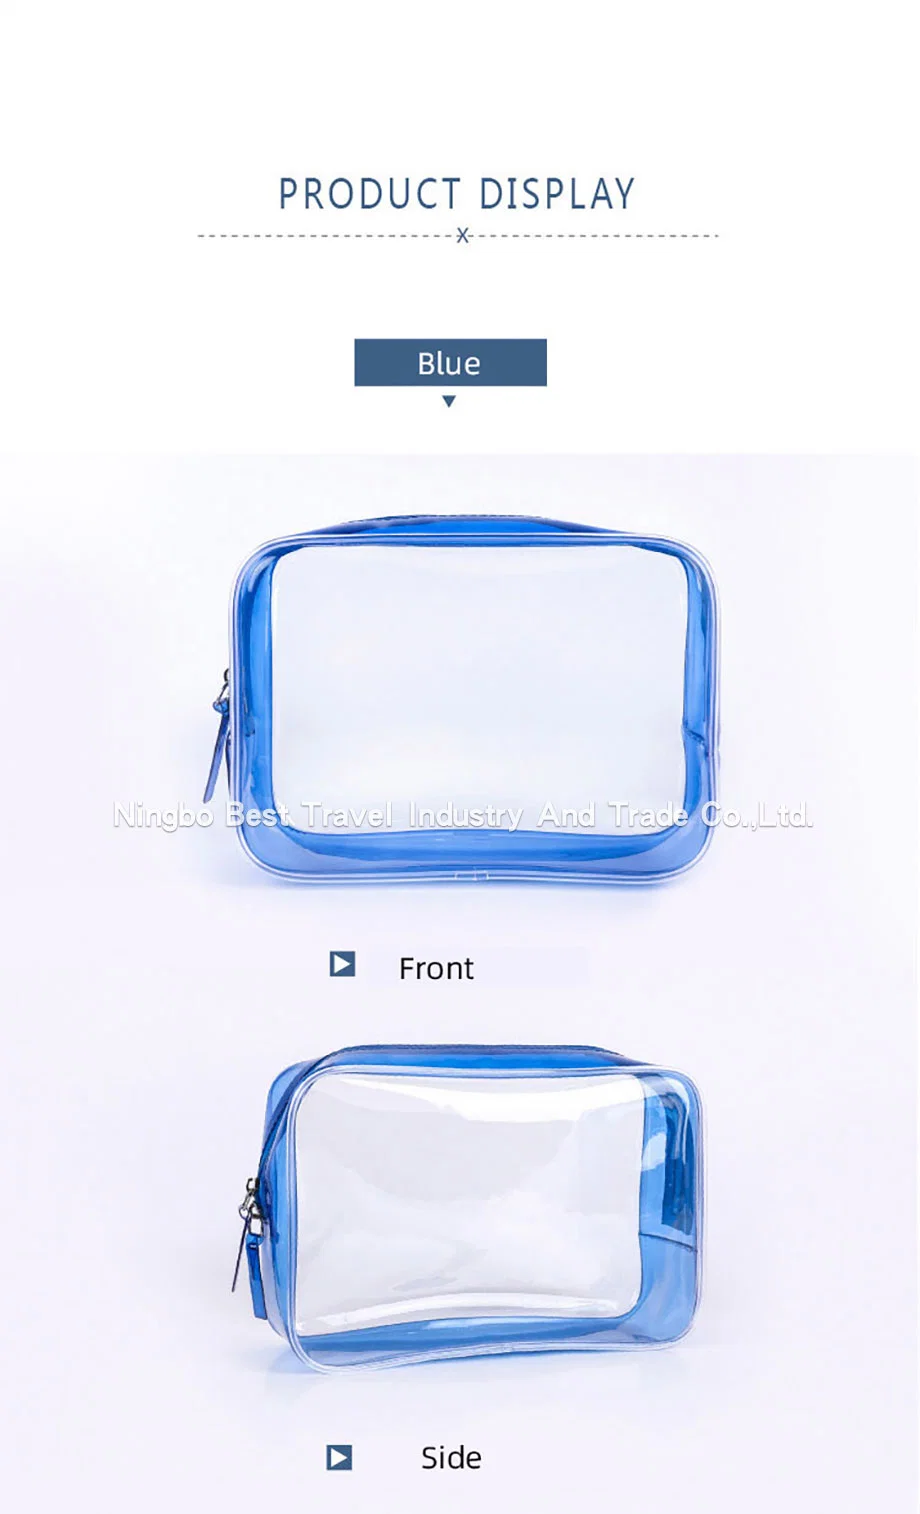 PVC Transparent 4-Piece Set Travel Waterproof Washing Makeup Toiletry Cosmetic Bag